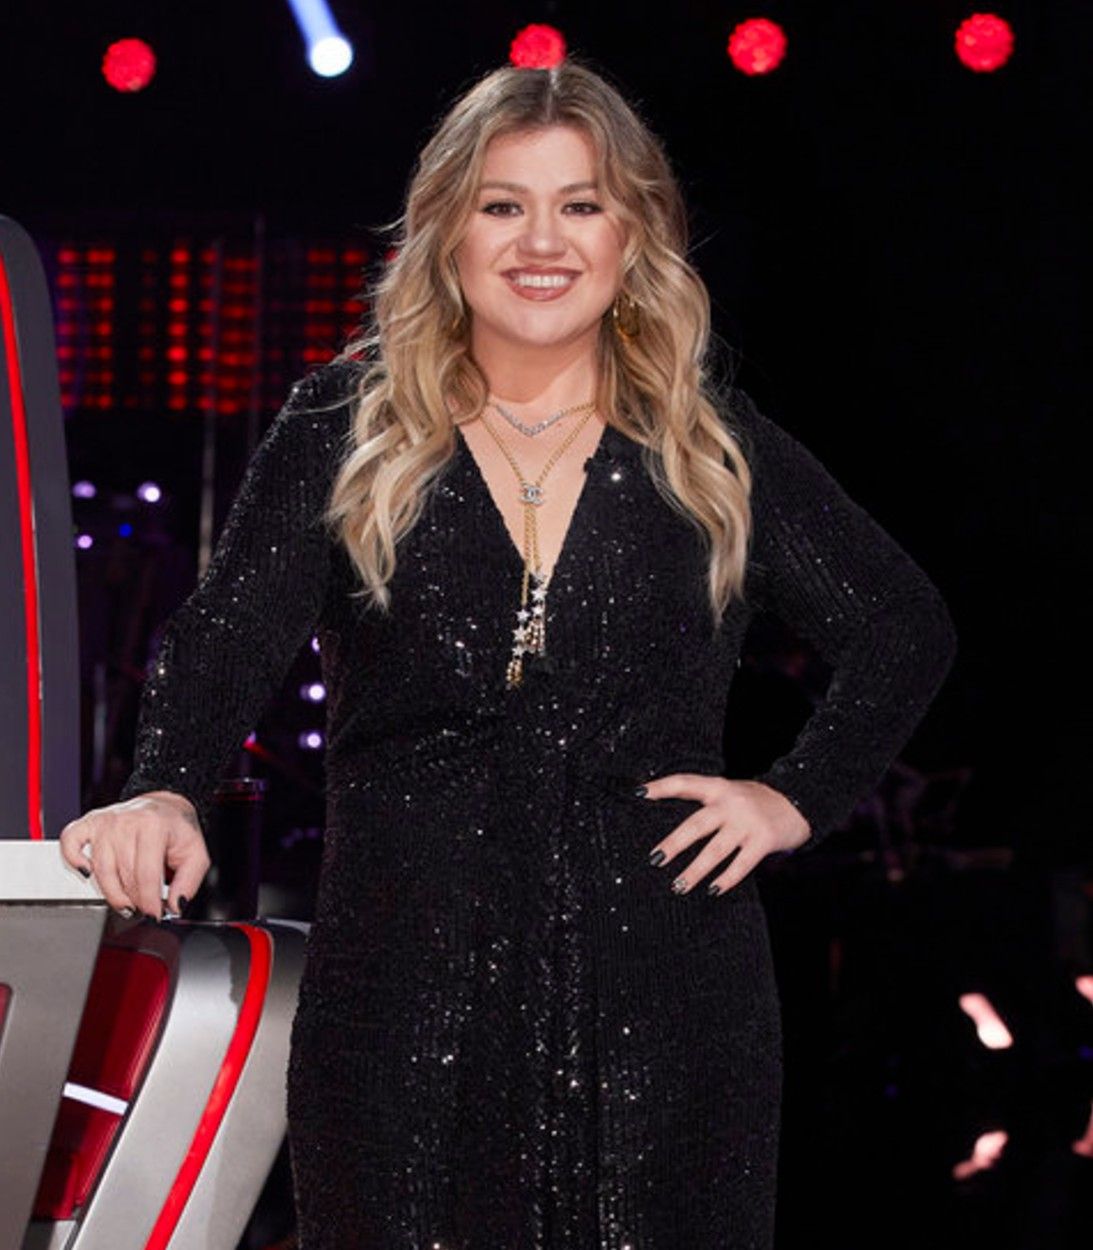 Kelly Clarkson on The Voice season 19 promo vertical